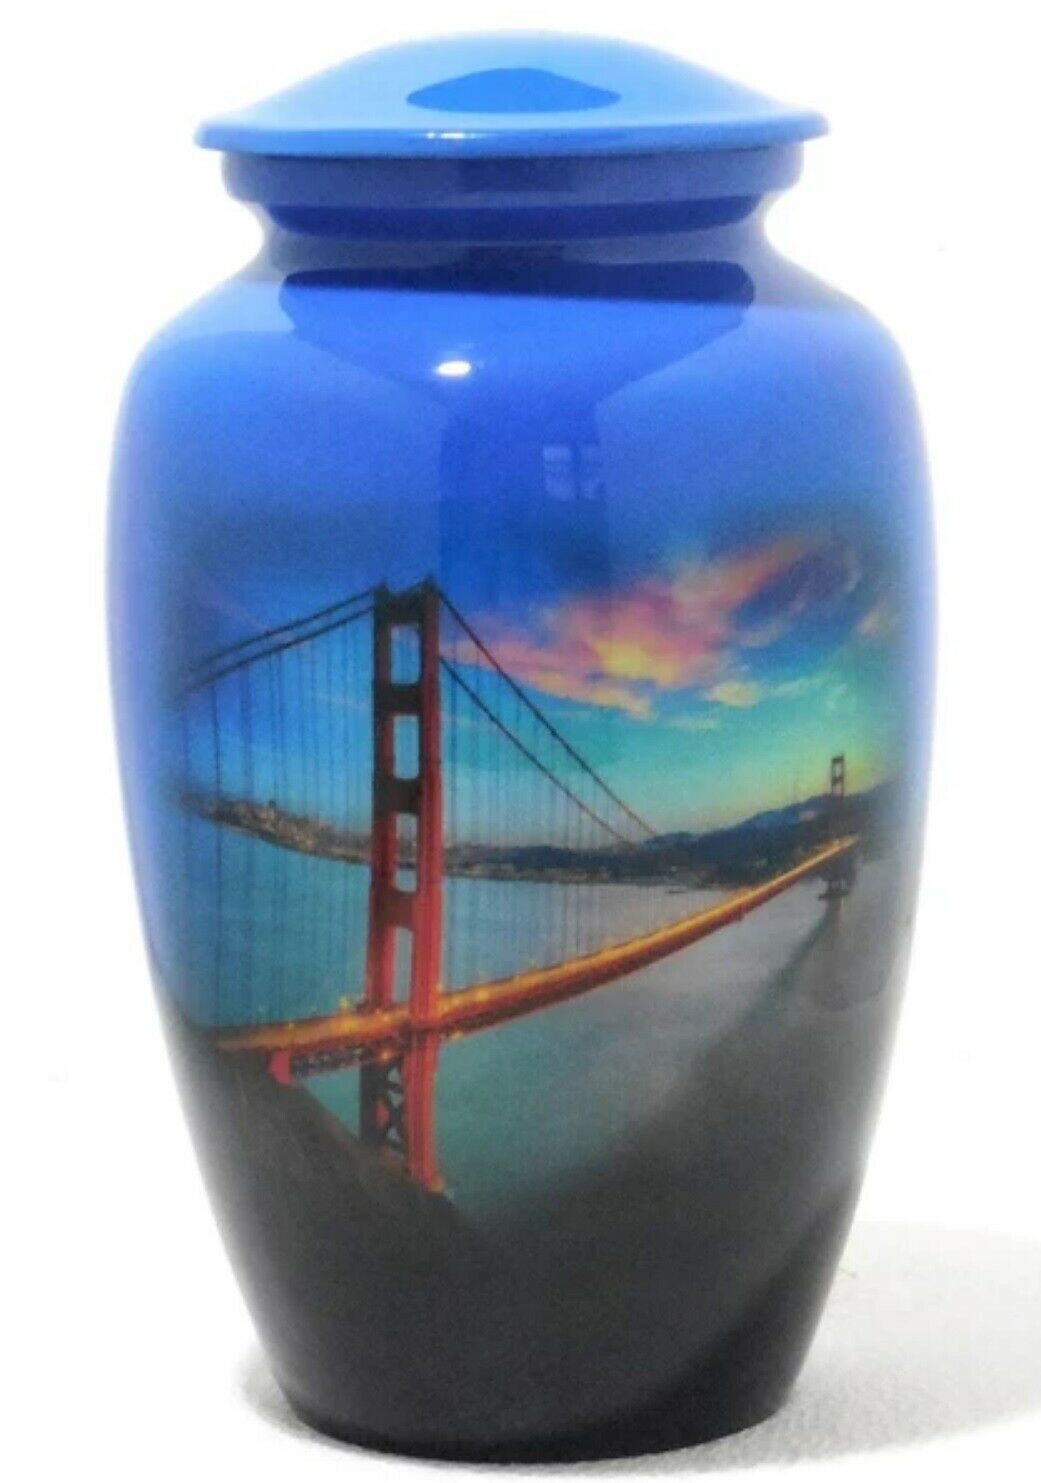 Large/Adult 200 Cubic Inch Golden Gate Bridge Aluminum Cremation Urn for Ashes